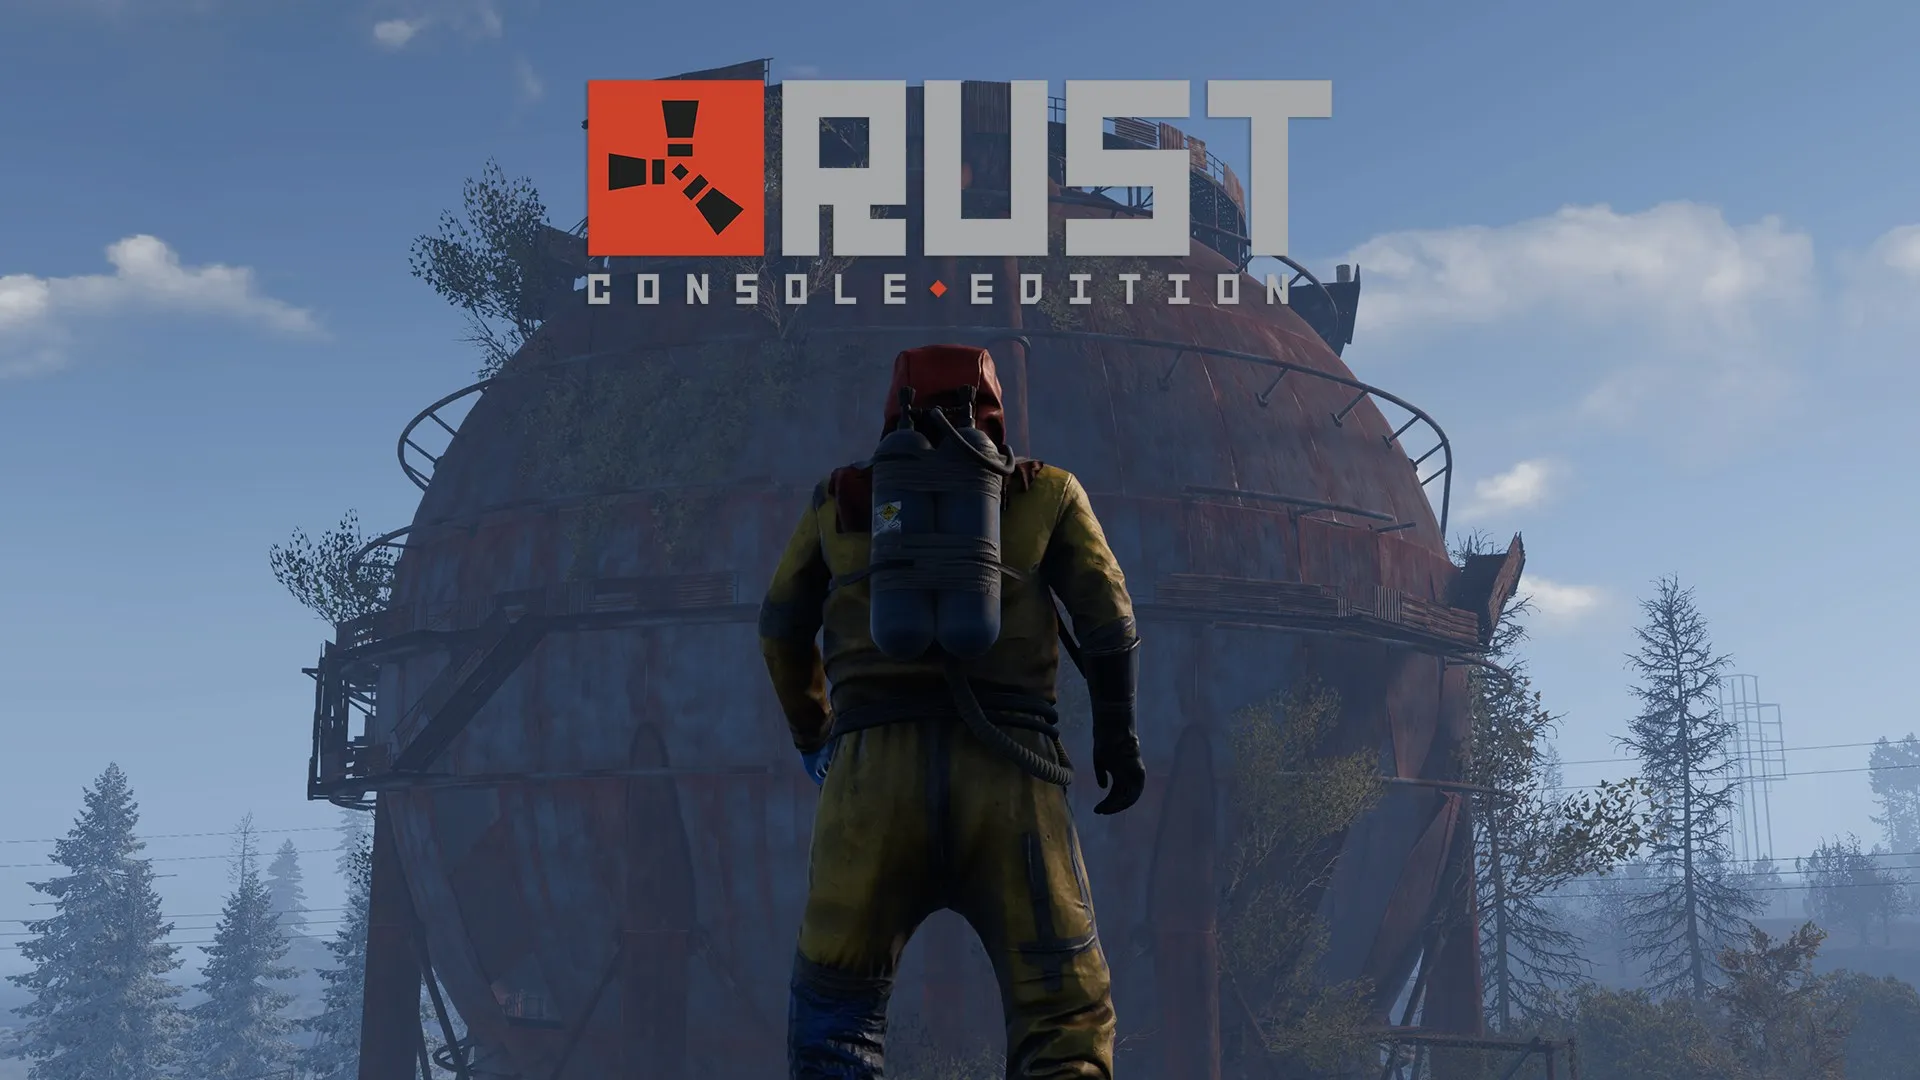 Rust Mobile